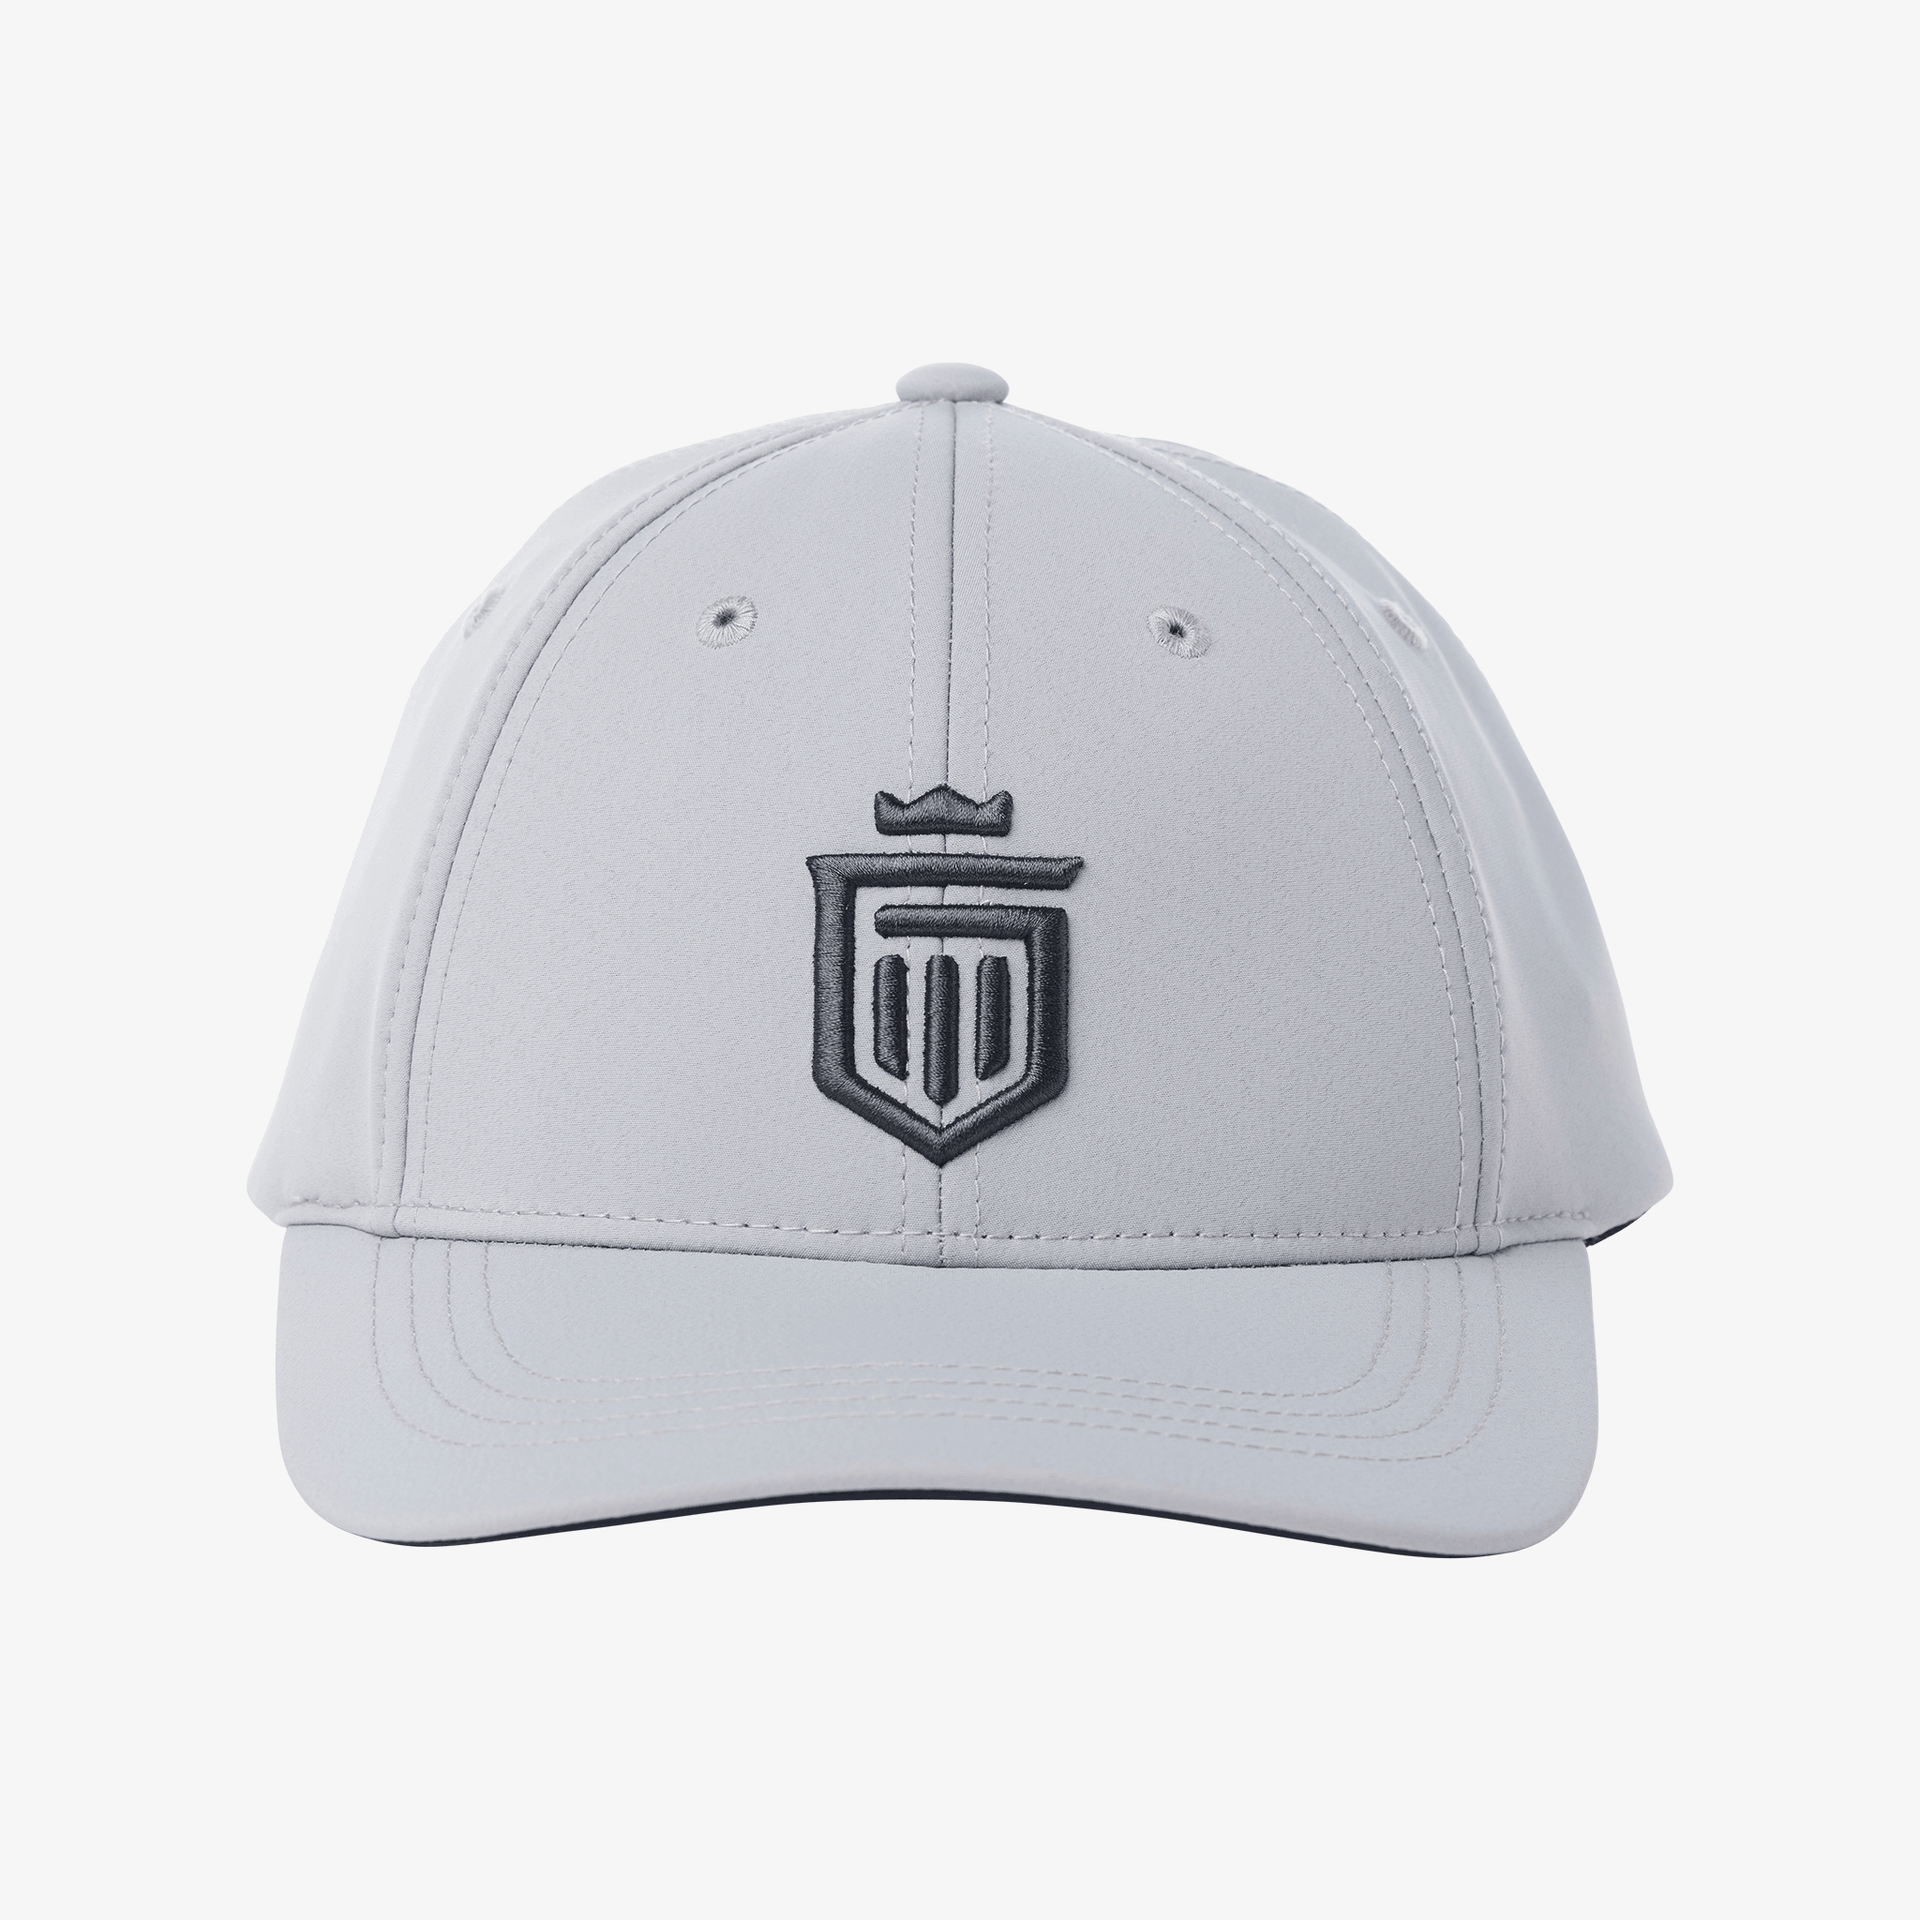 3D Logo Hat - Greatness Wins